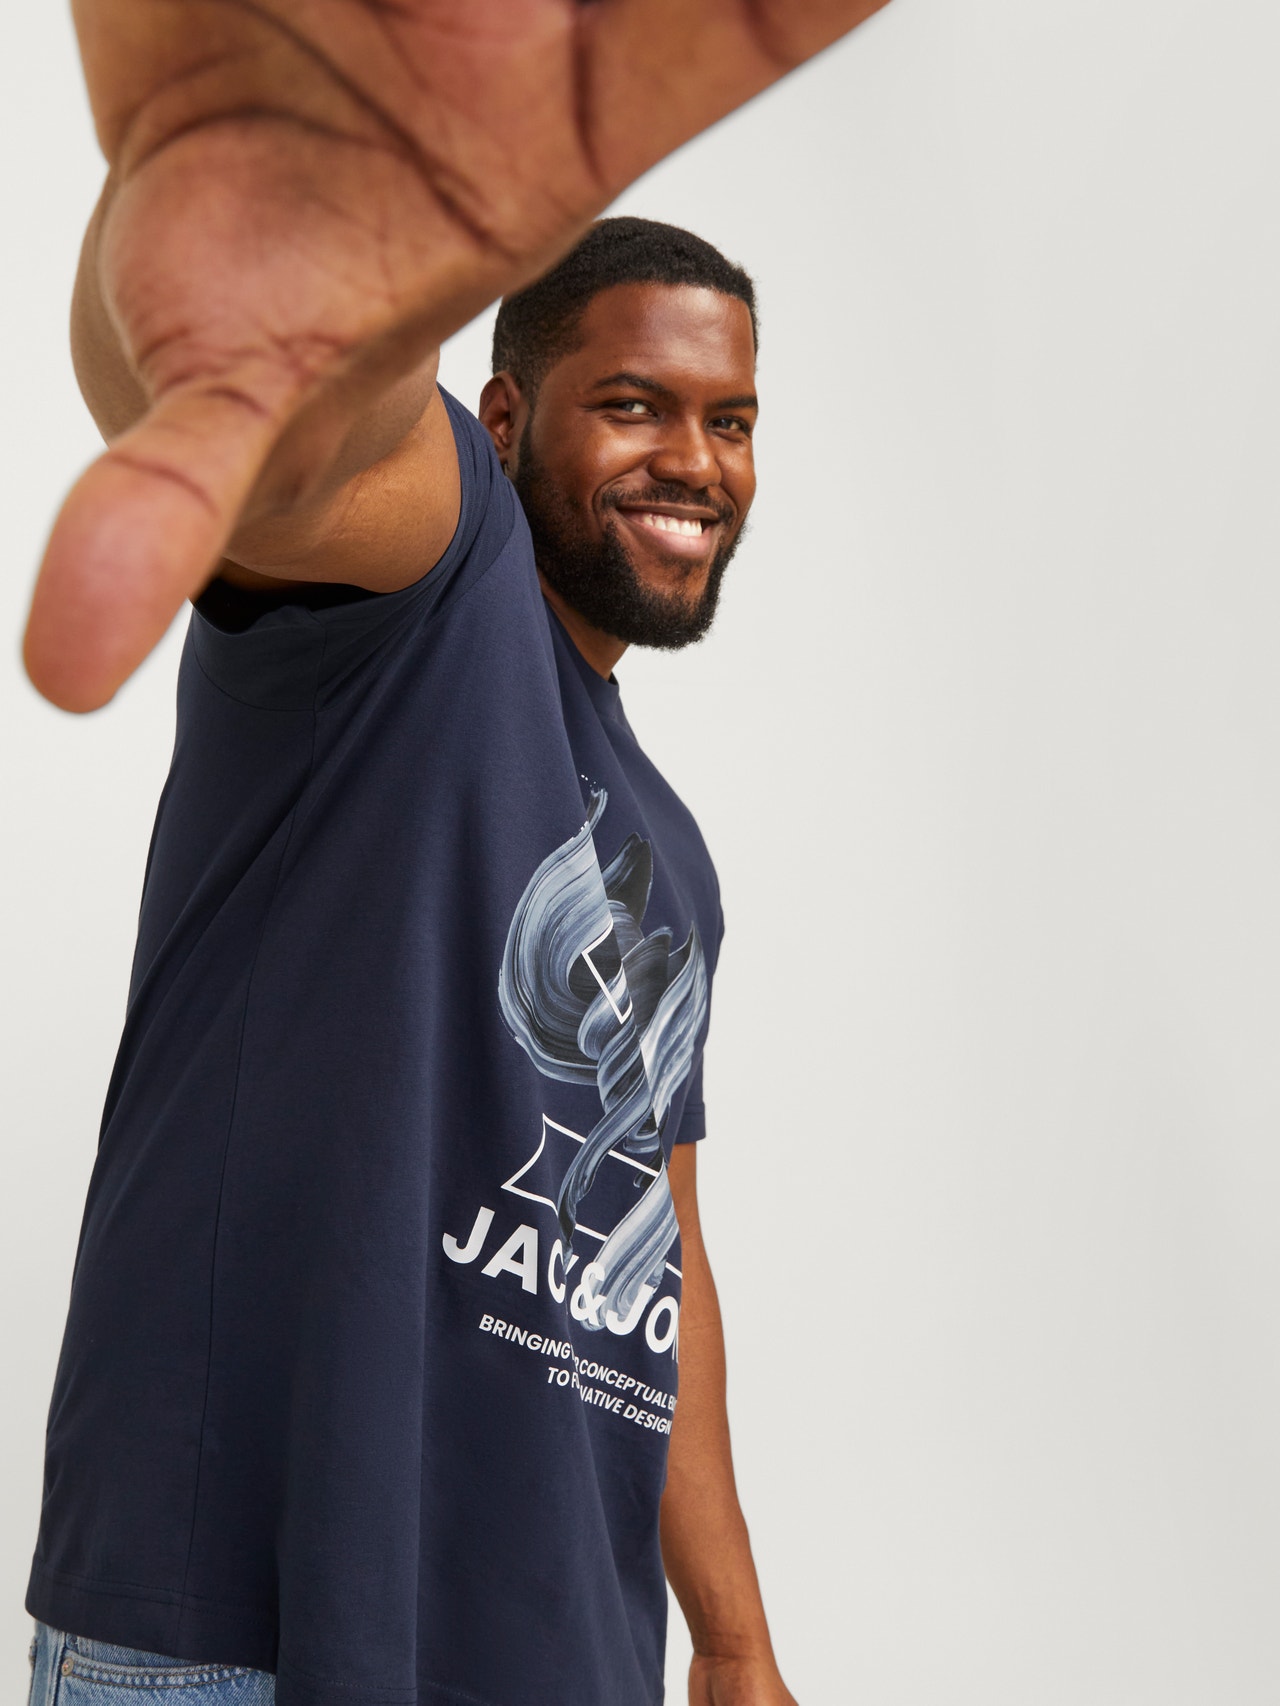 Jack & Jones Plus Size Trykk T-skjorte -Navy Blazer - 12257370